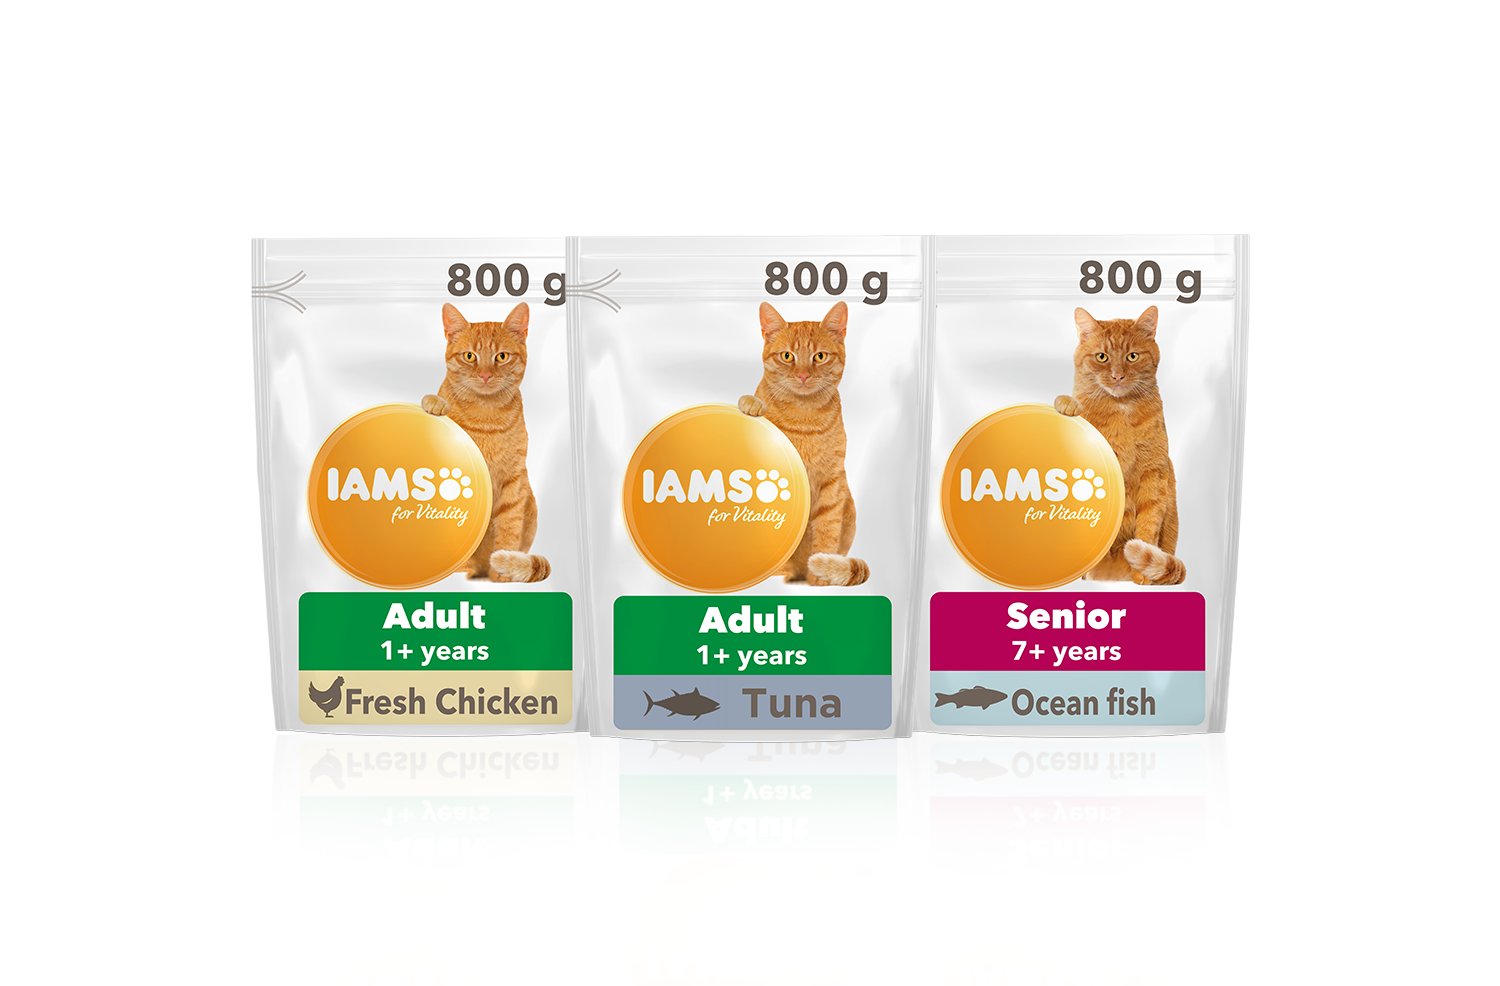 Packshots of IAMS 800g dry cat food